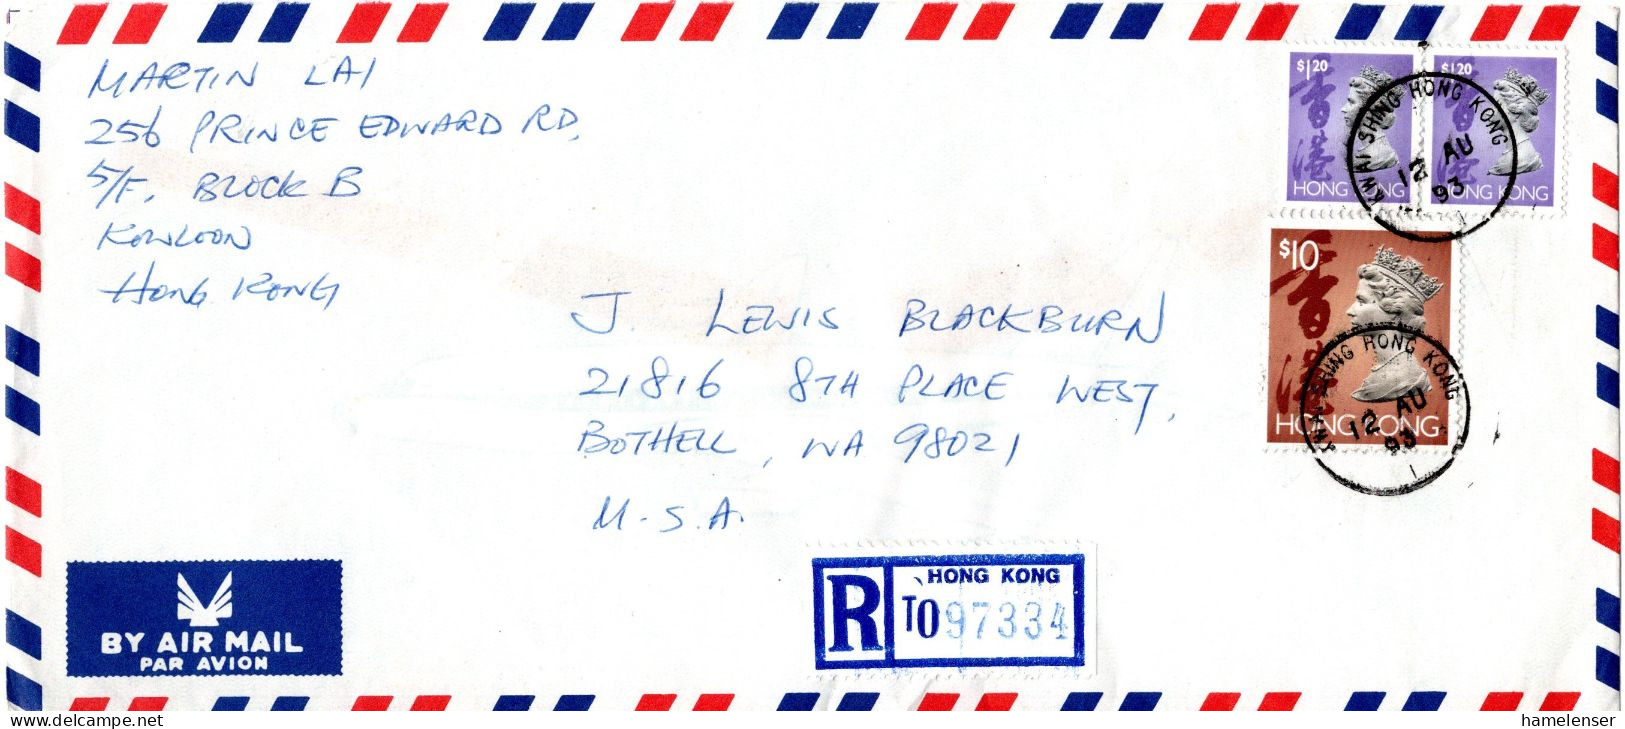 L76707 - Hong Kong - 1993 - $10 QEII MiF A R-LpBf KWAI SHING -> Bothell, WA (USA) - Cartas & Documentos